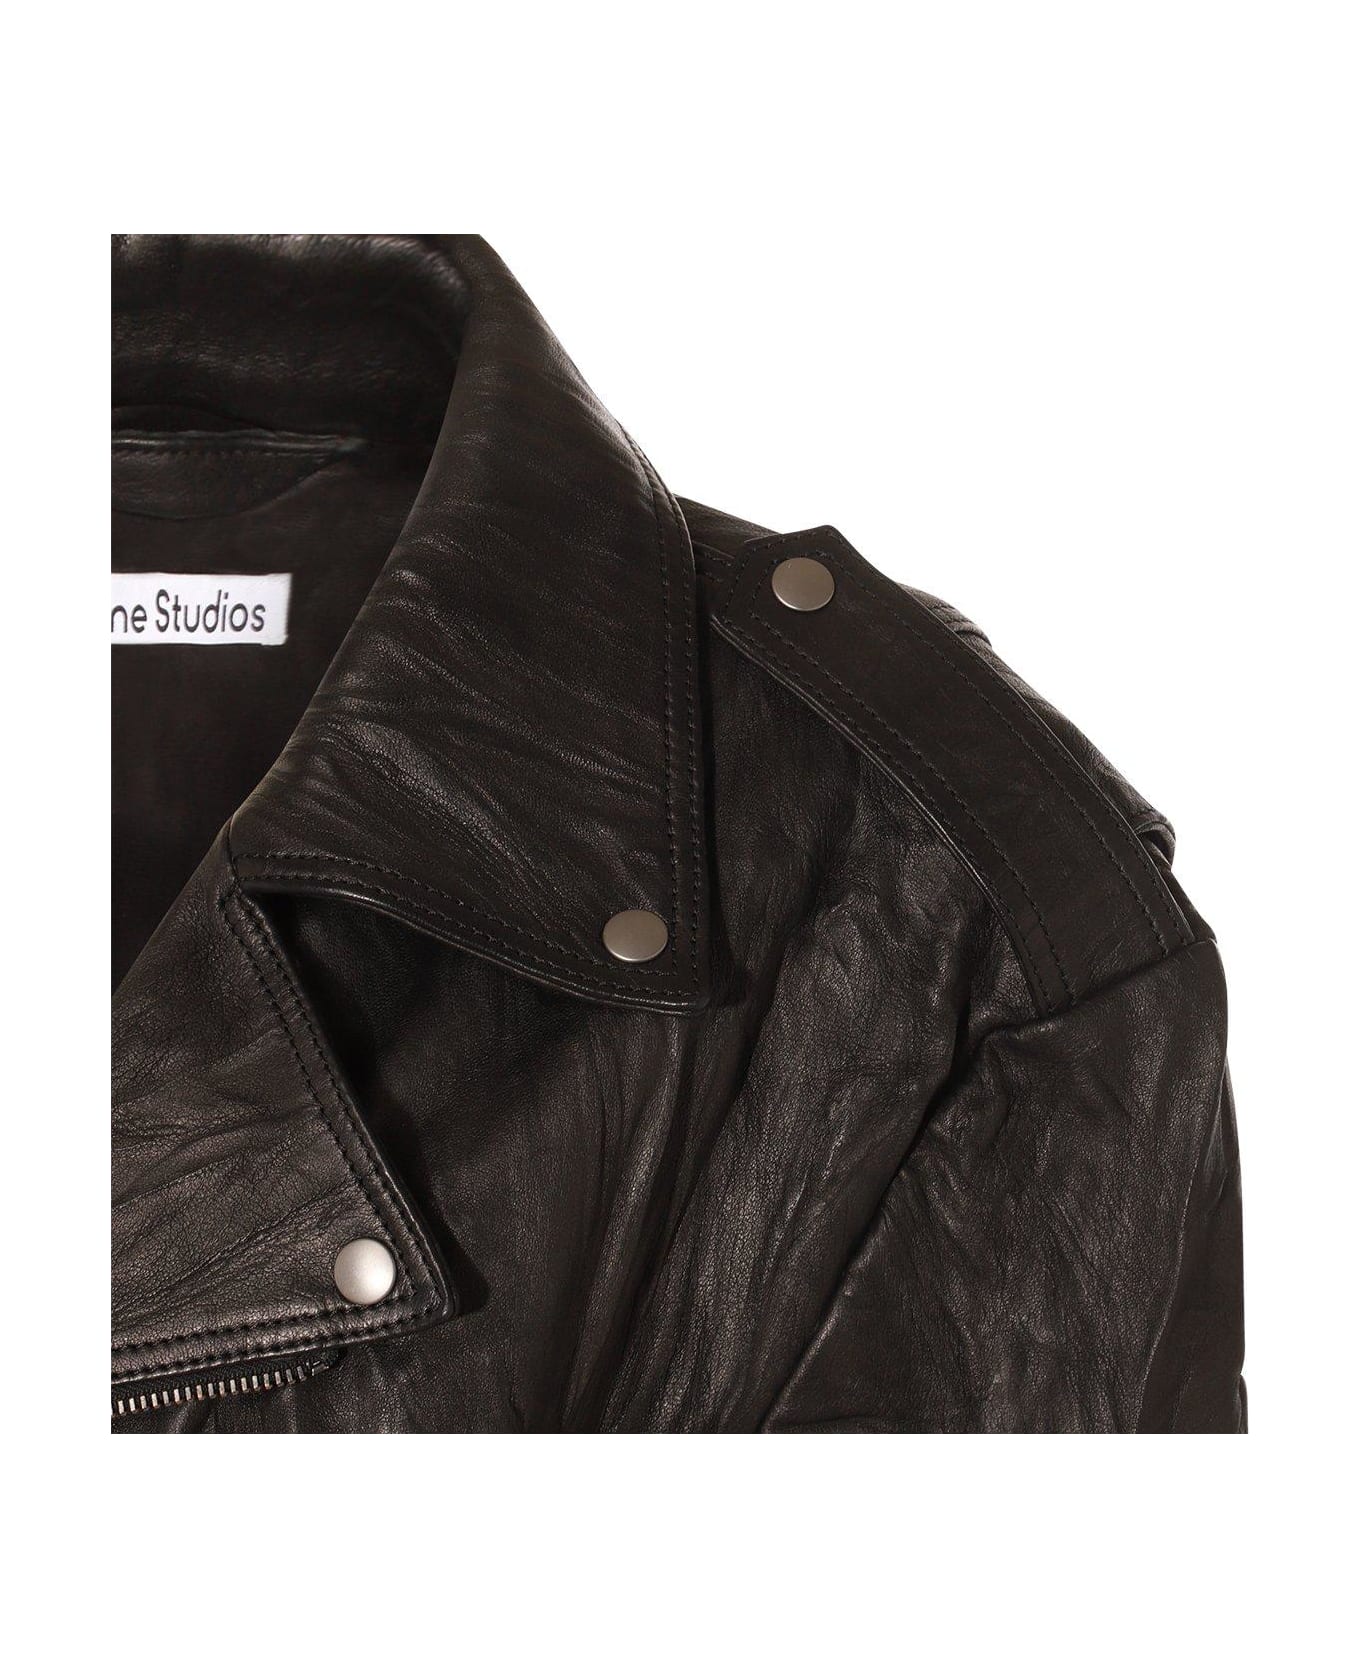 Acne Studios Double-breasted Zip Leather Jacket - Black レザージャケット